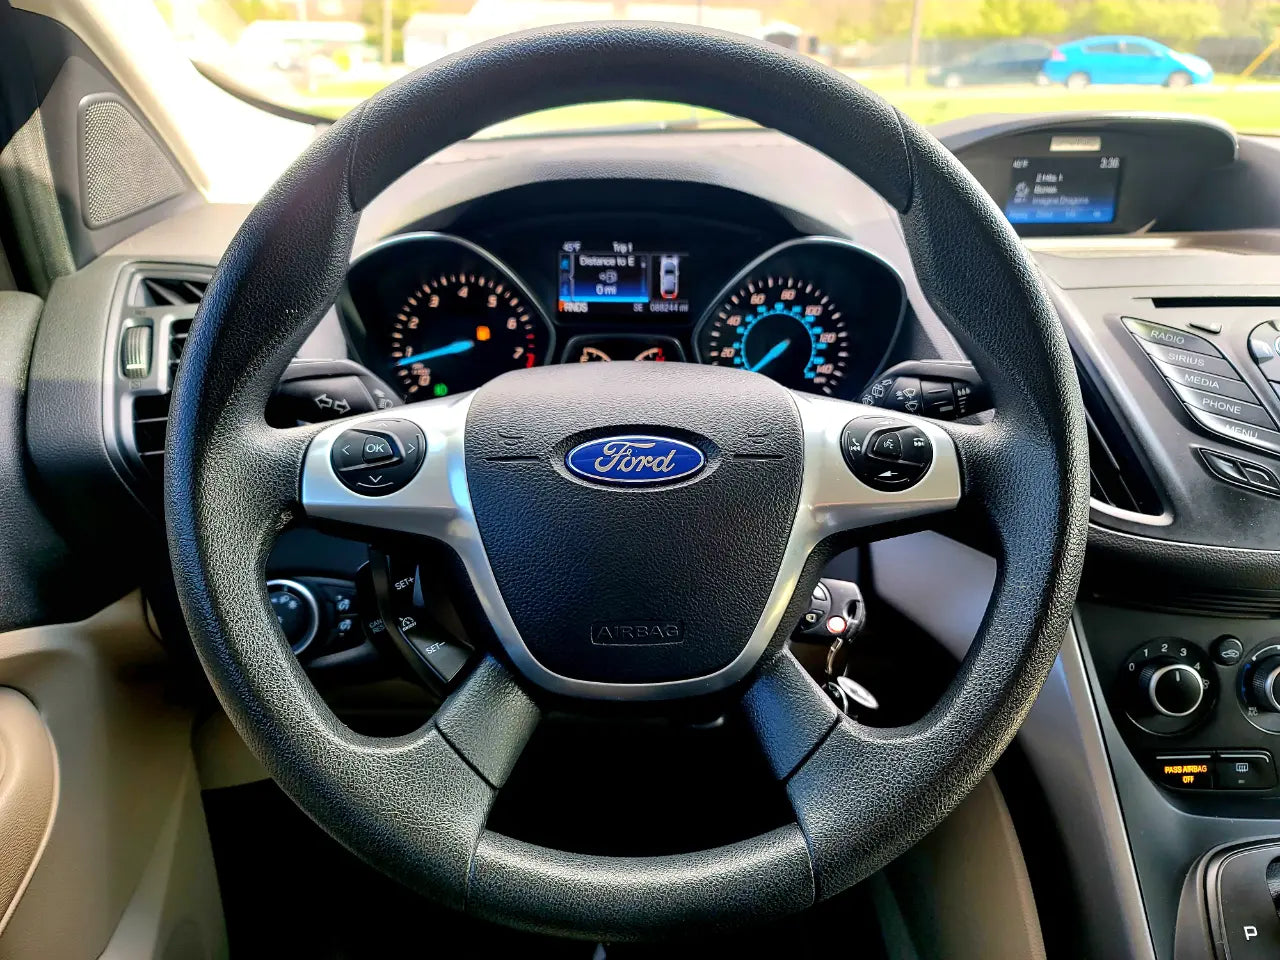 2016 Ford Escape SE $799 DOWN & DRIVE IN 1 HOUR!